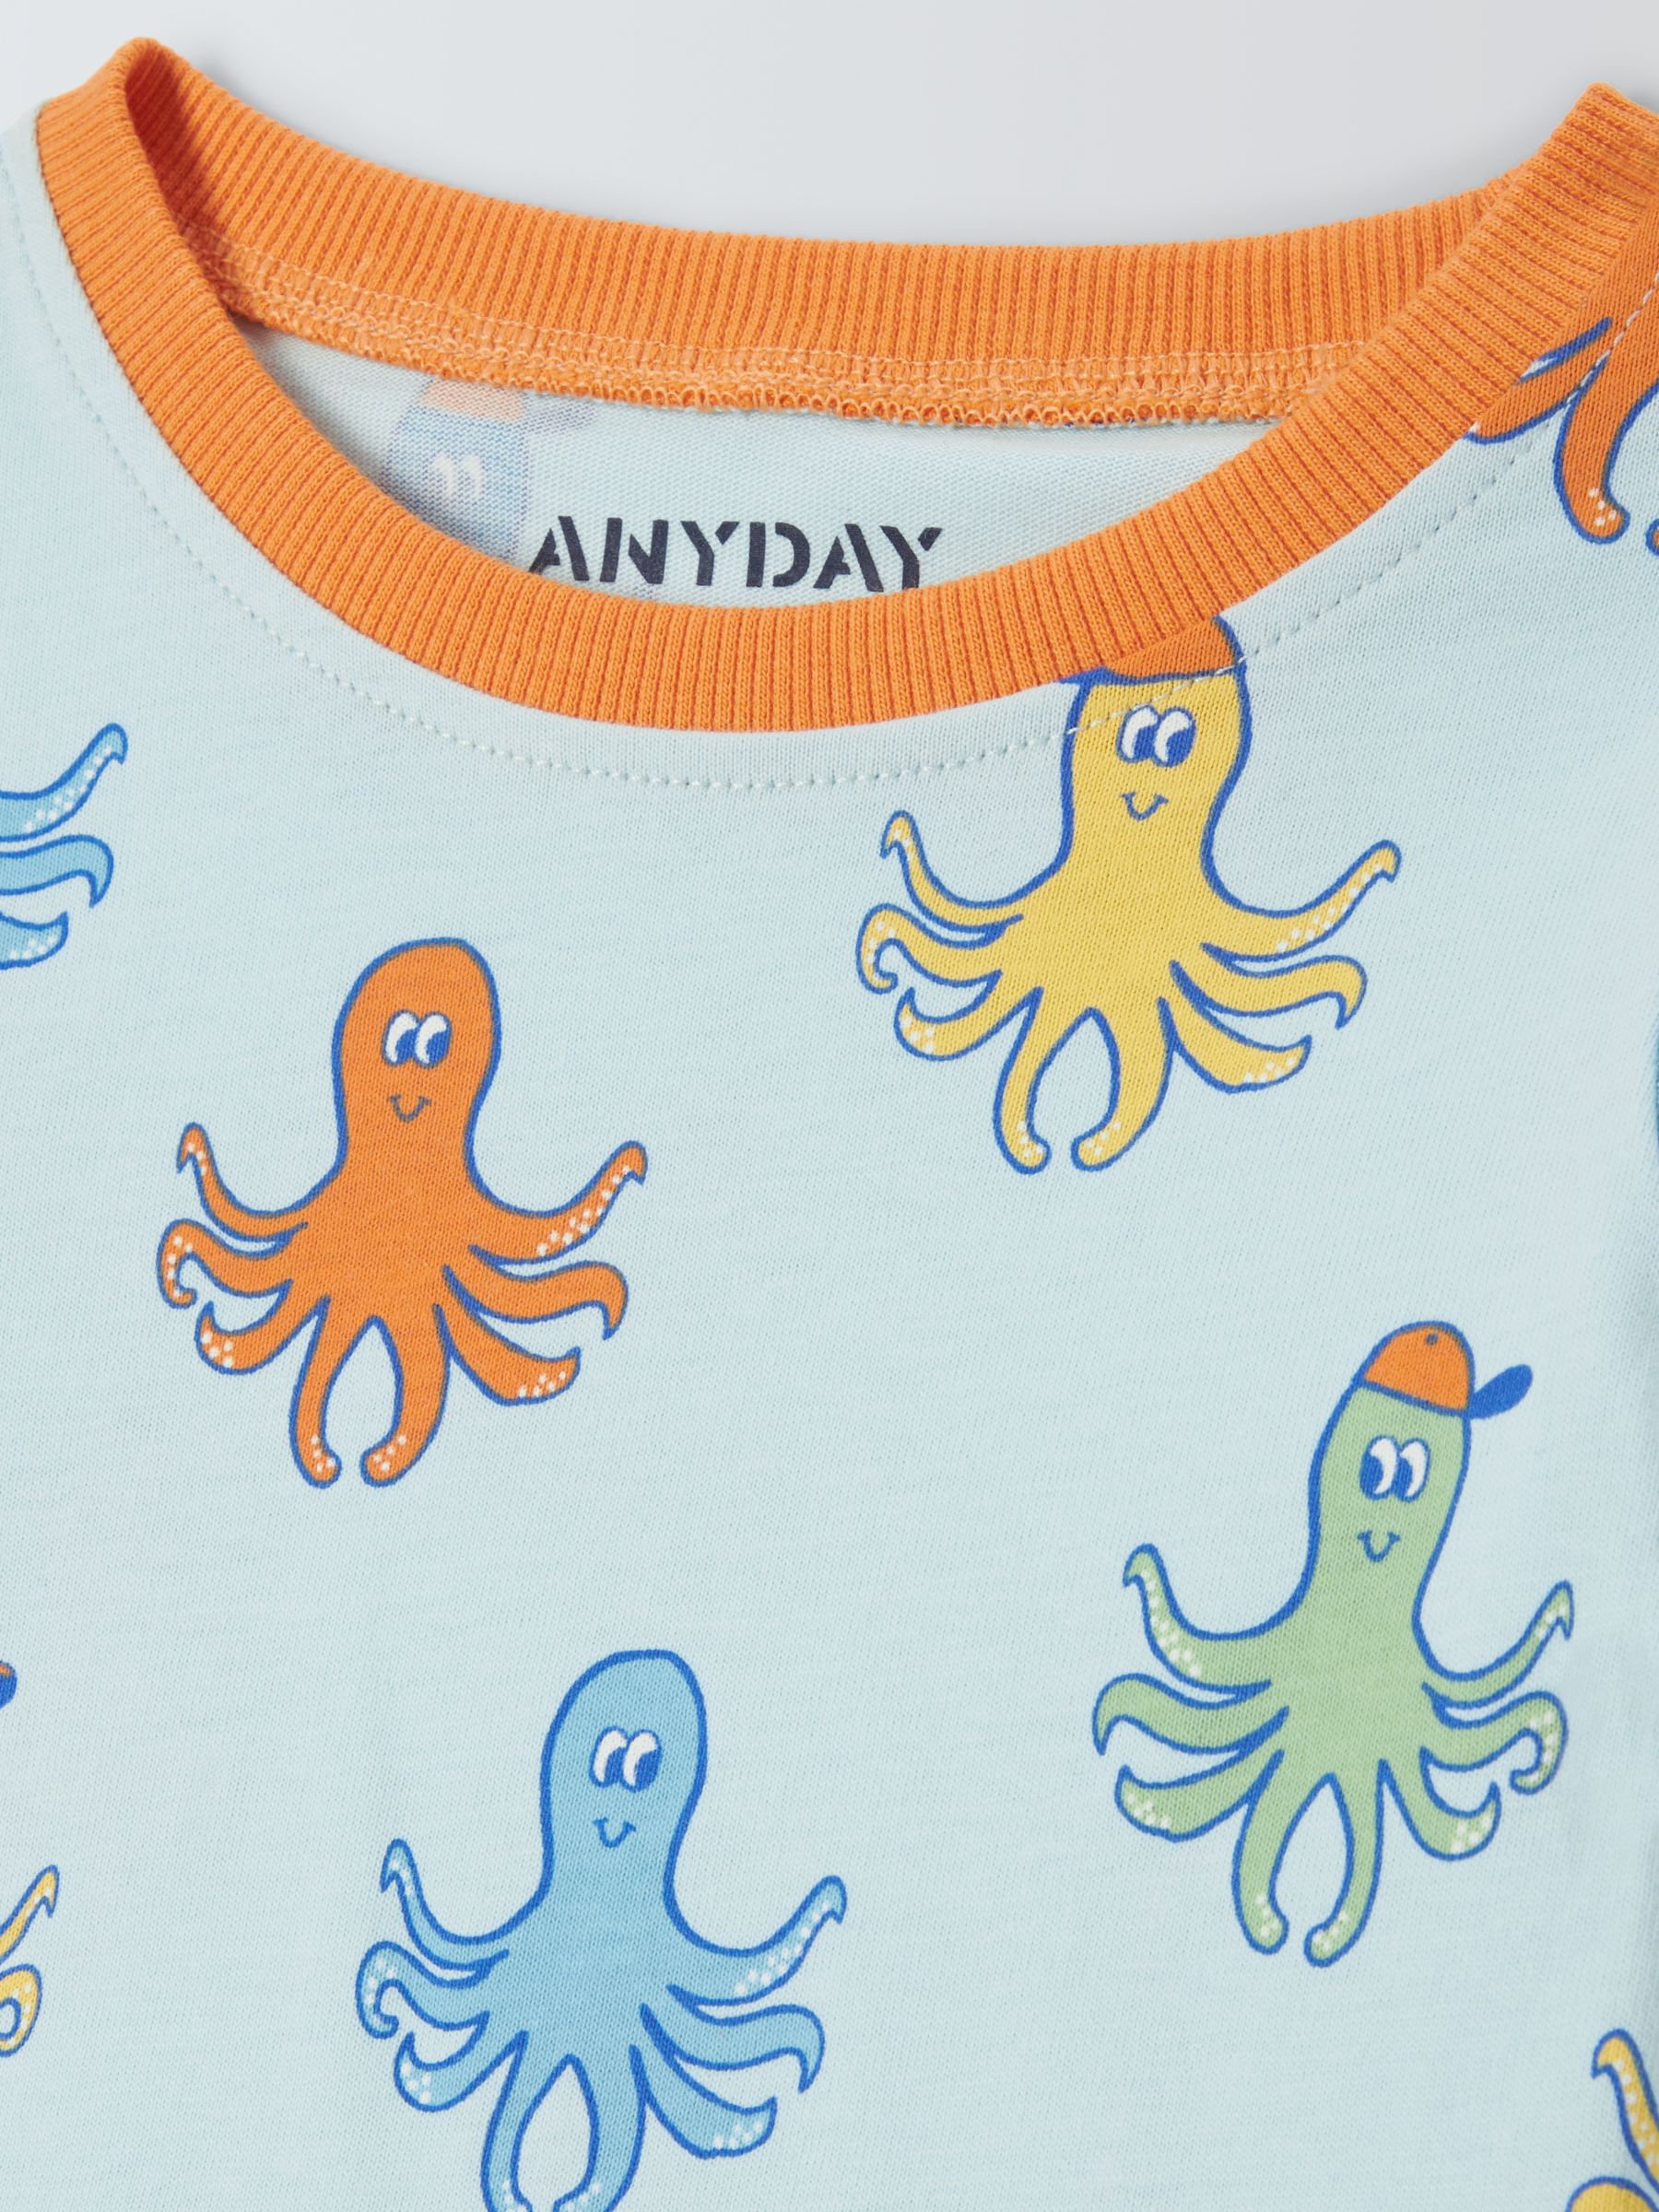 Buy John Lewis ANYDAY Baby Octopus Print Pyjamas, Blue/Multi Online at johnlewis.com